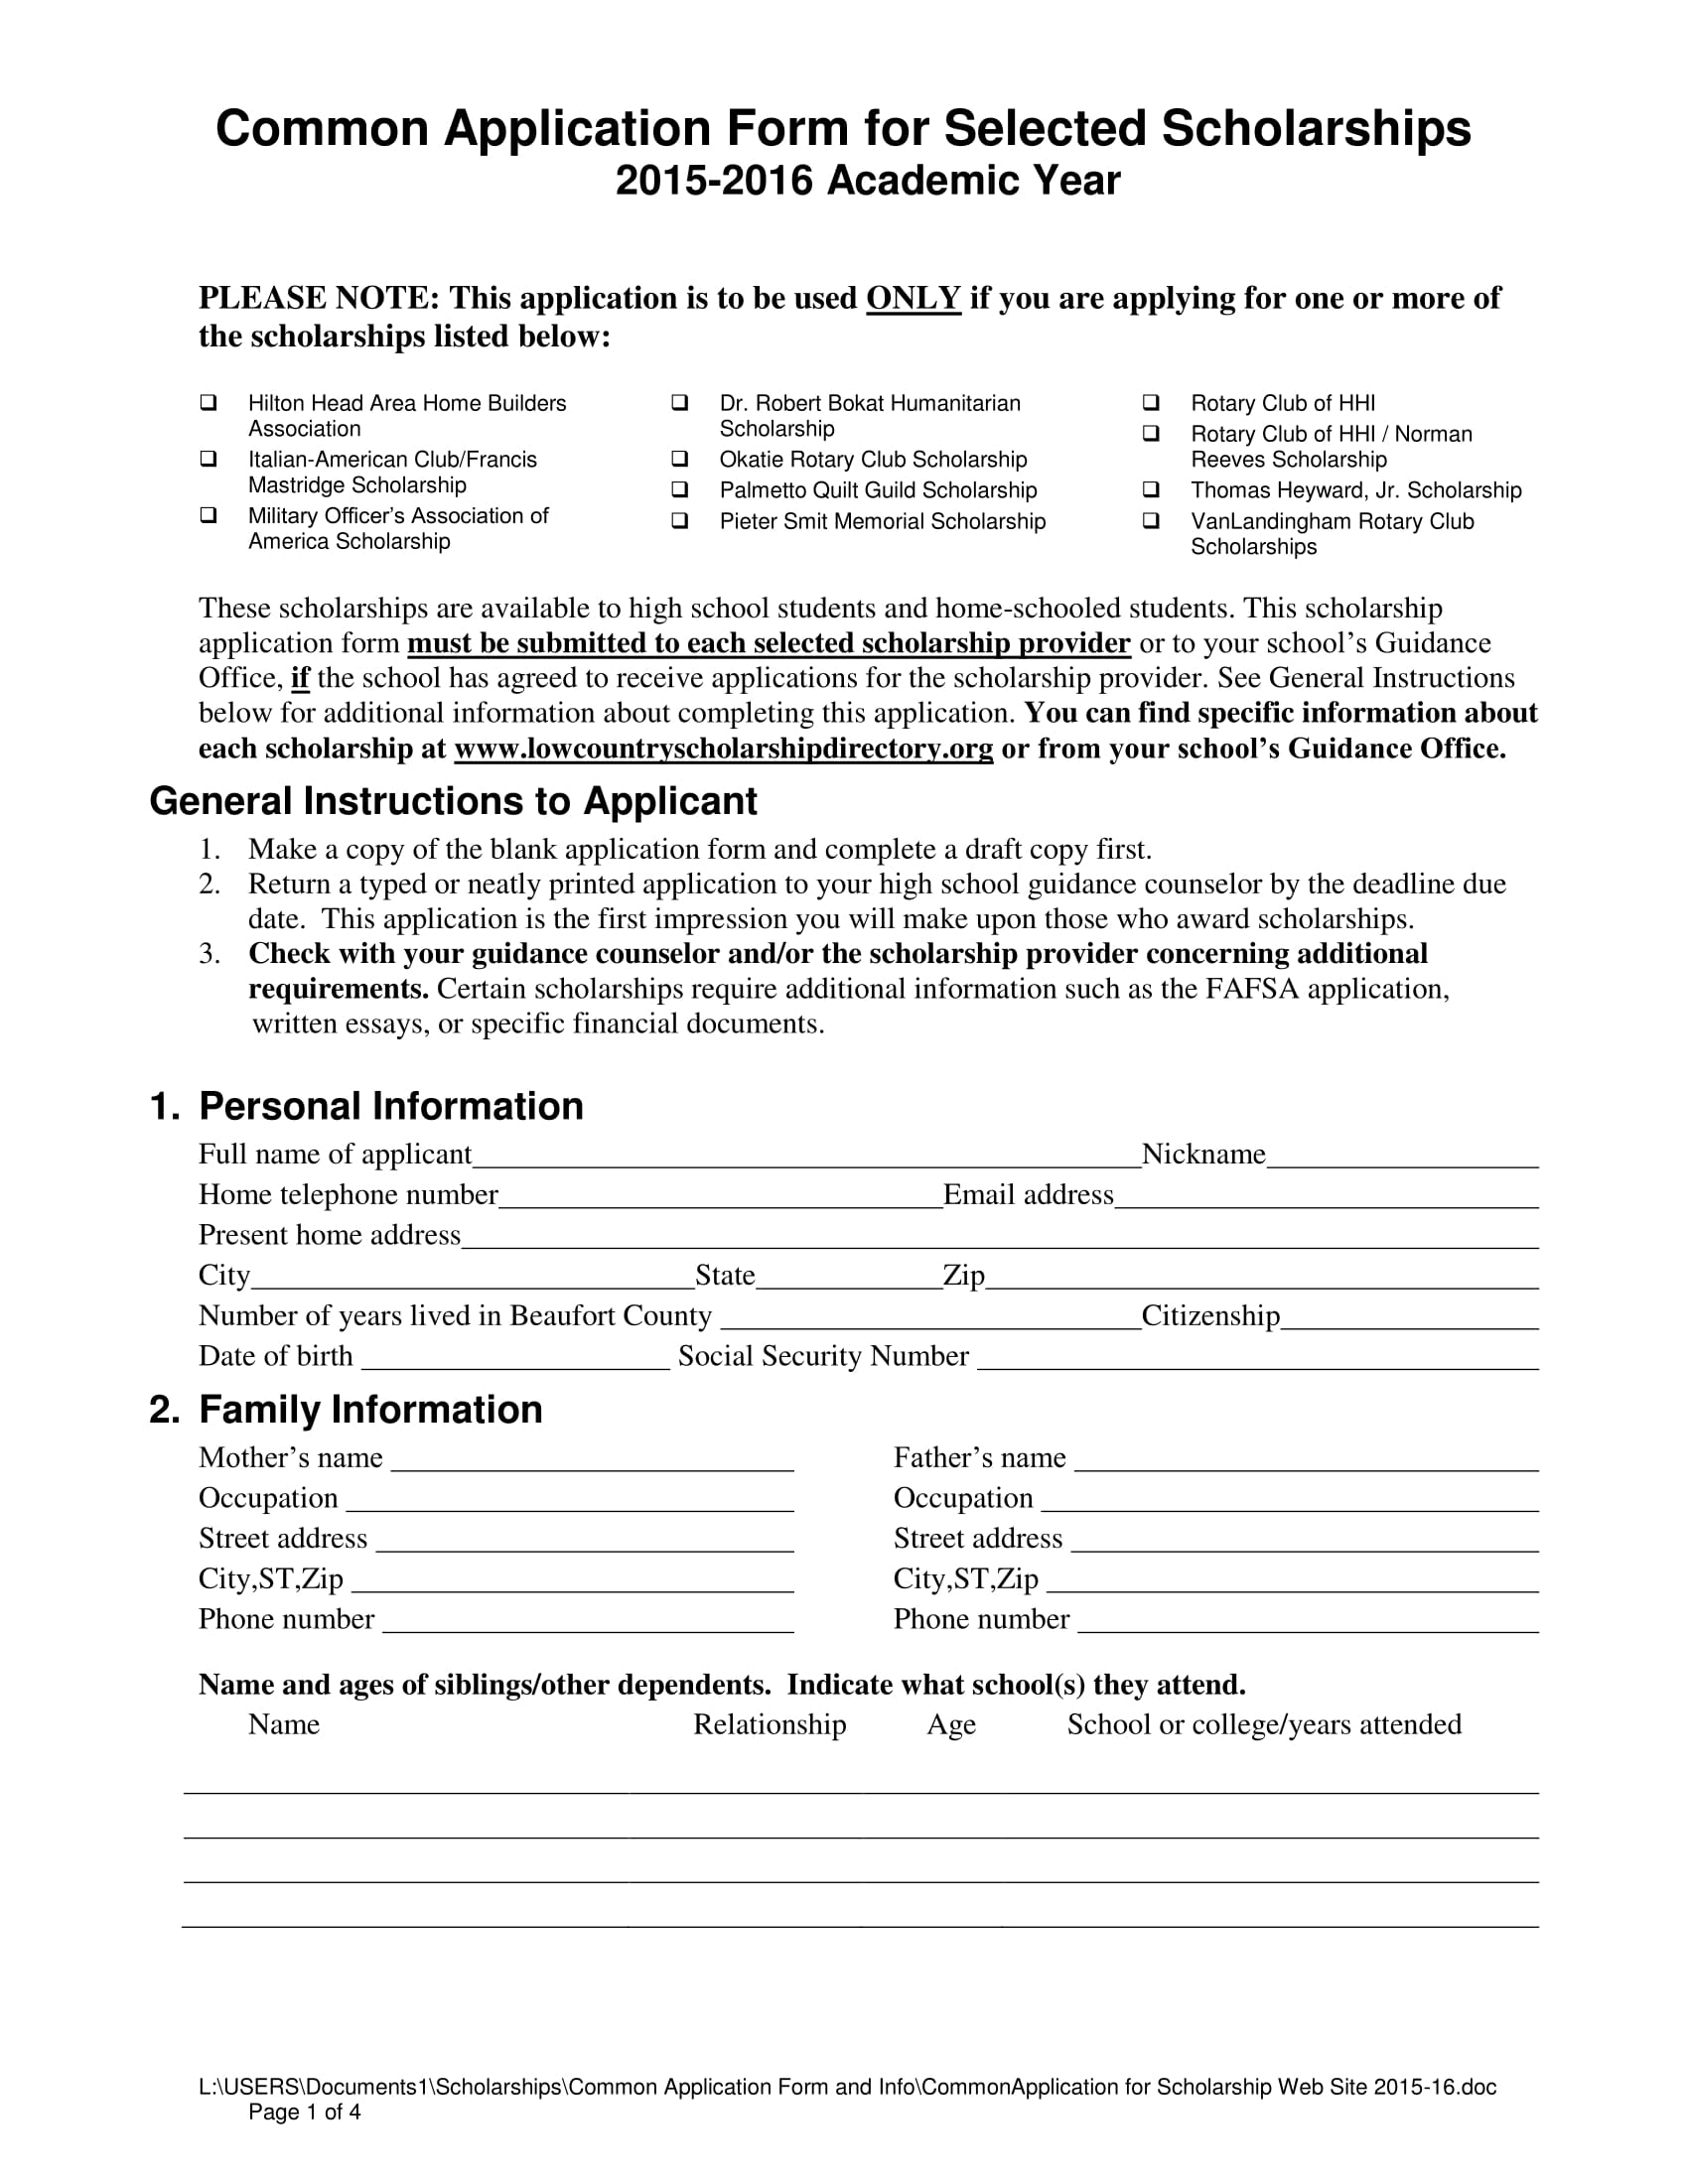 general scholarship application form 1